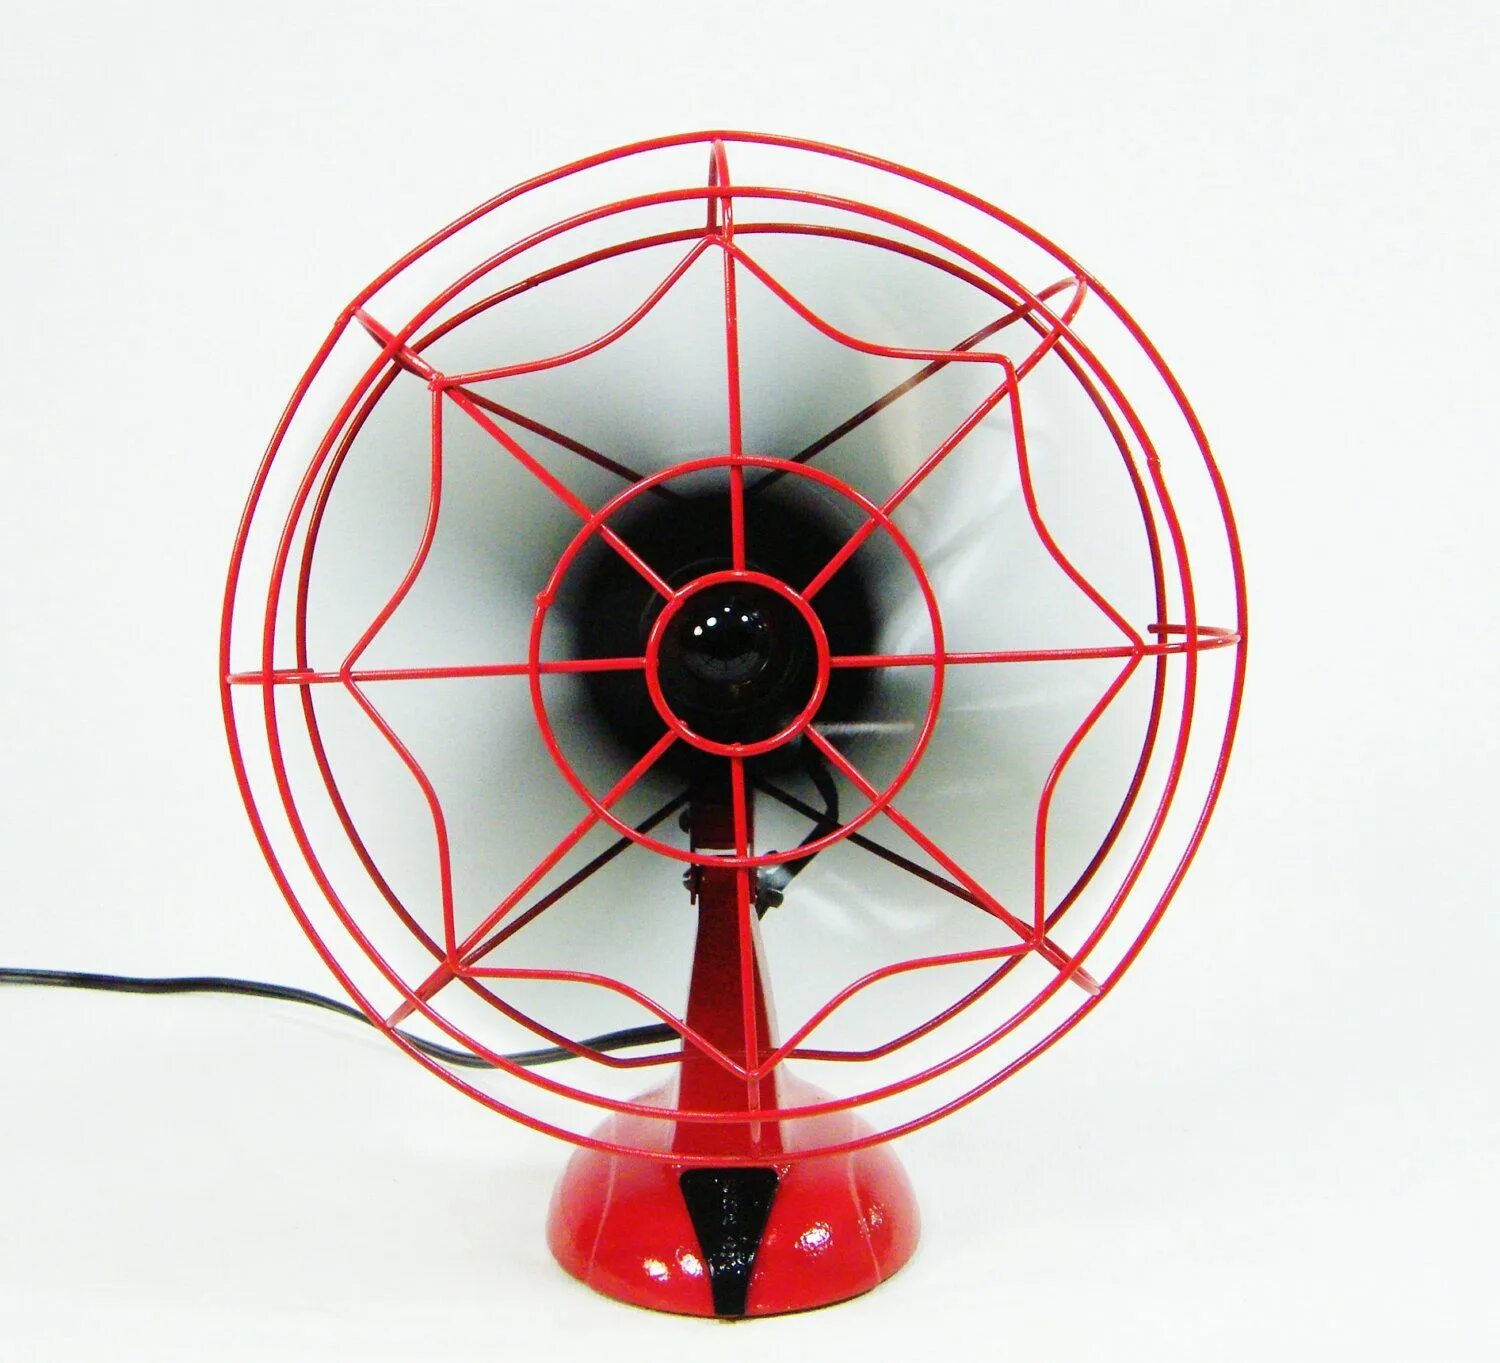 Red fan. Красный вентилятор. Черно красный вентилятор. Вентилятор настольный красный. Вентилятор на Красном фоне.